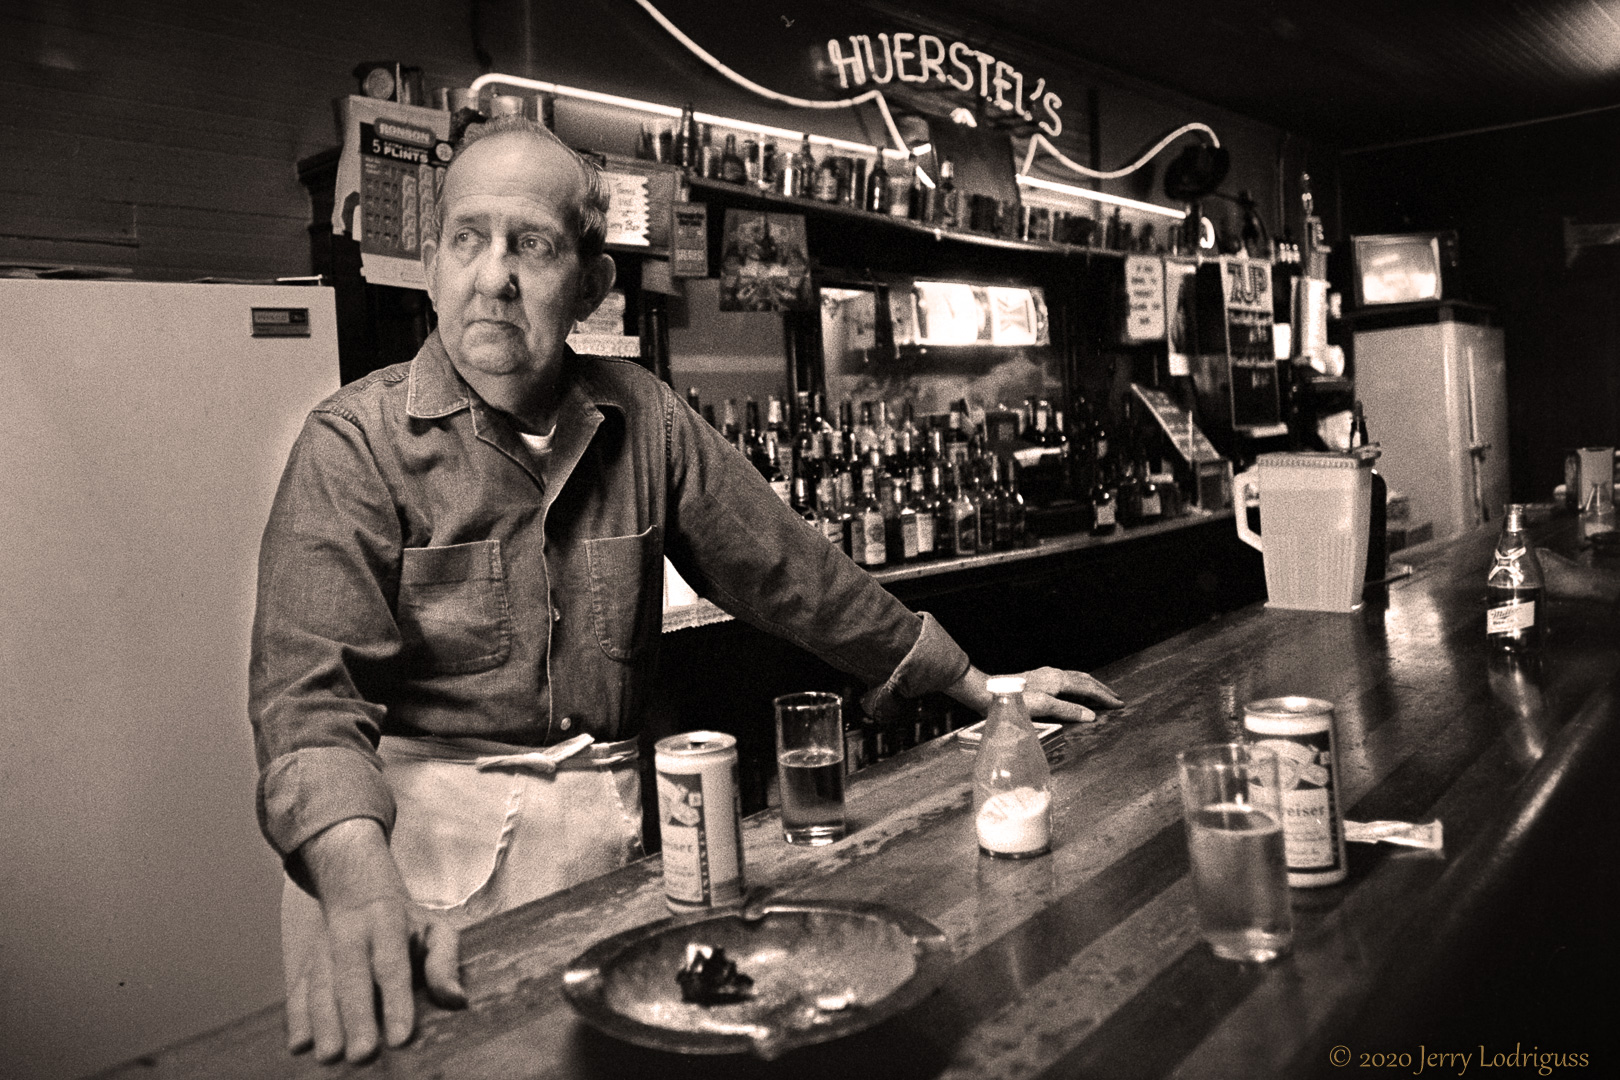 Clem Huerstel, Huerstel's Bar, Ninth Ward, New Orleans.